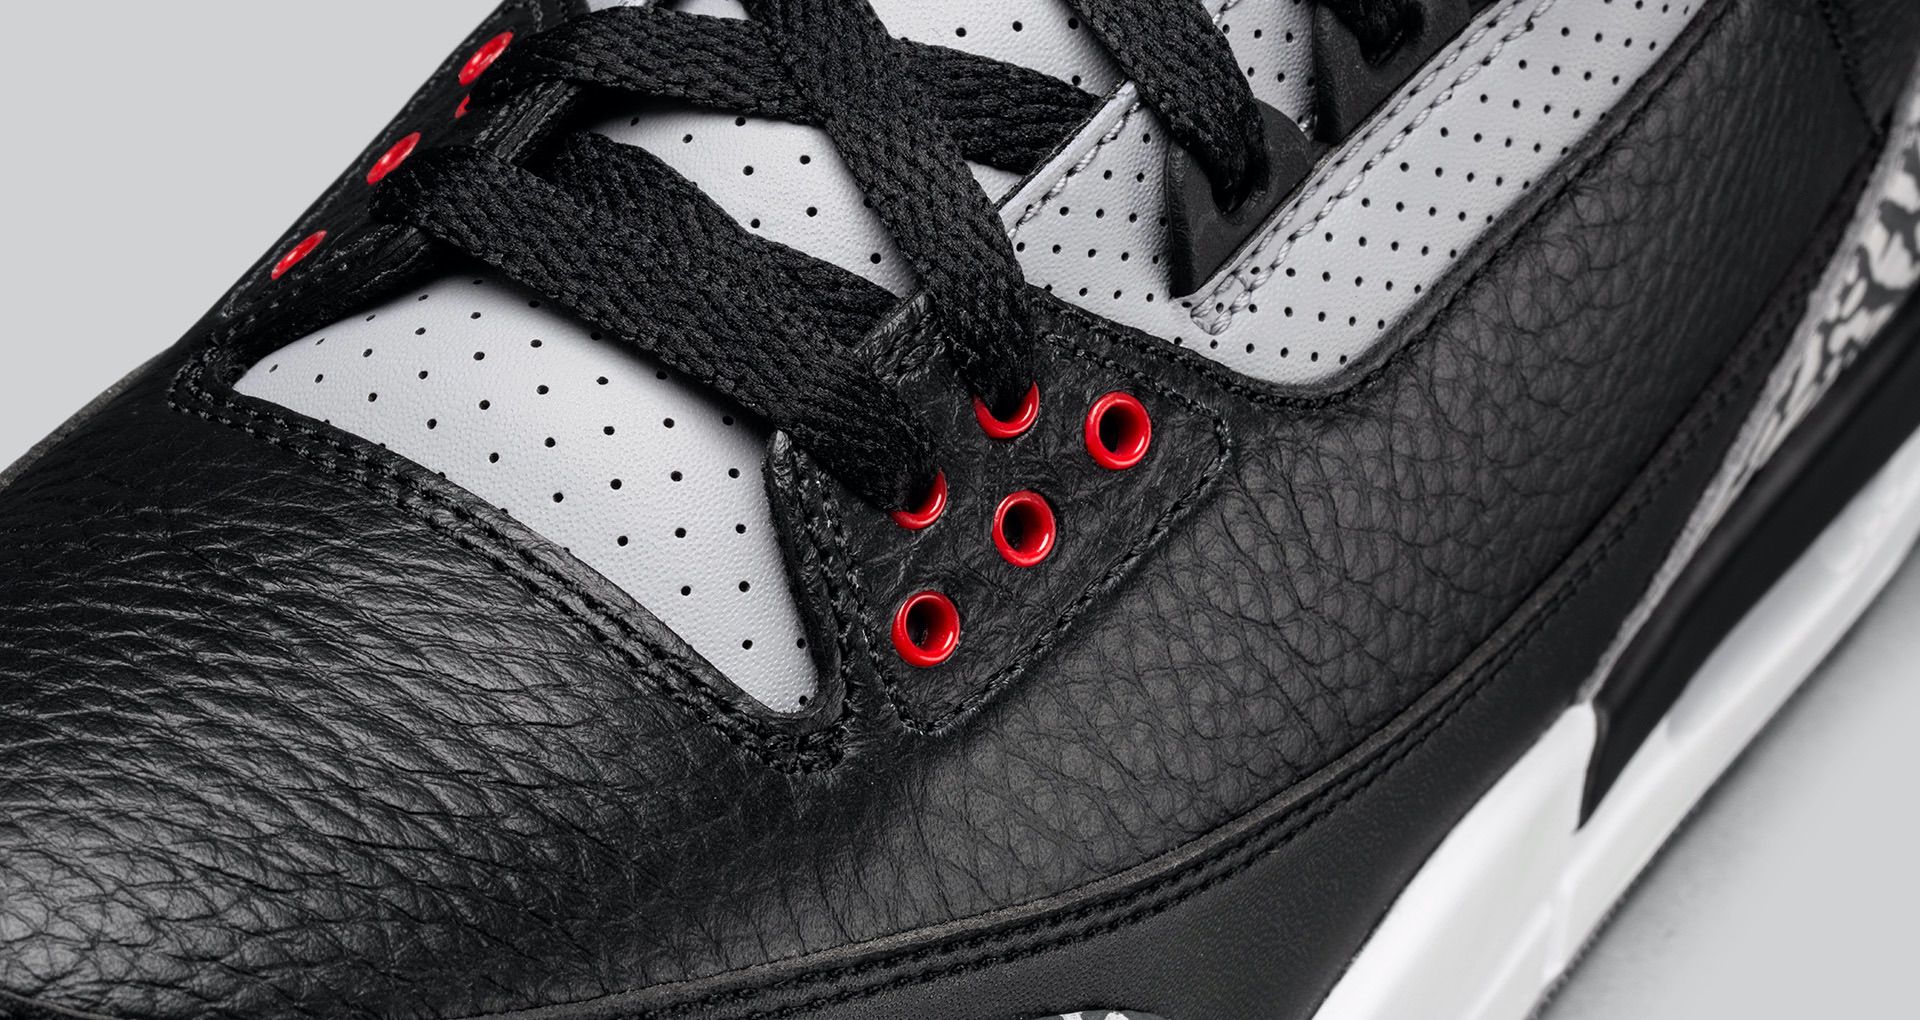 Nike continues Air Jordan III push with Tinker Hatfield inspired designs